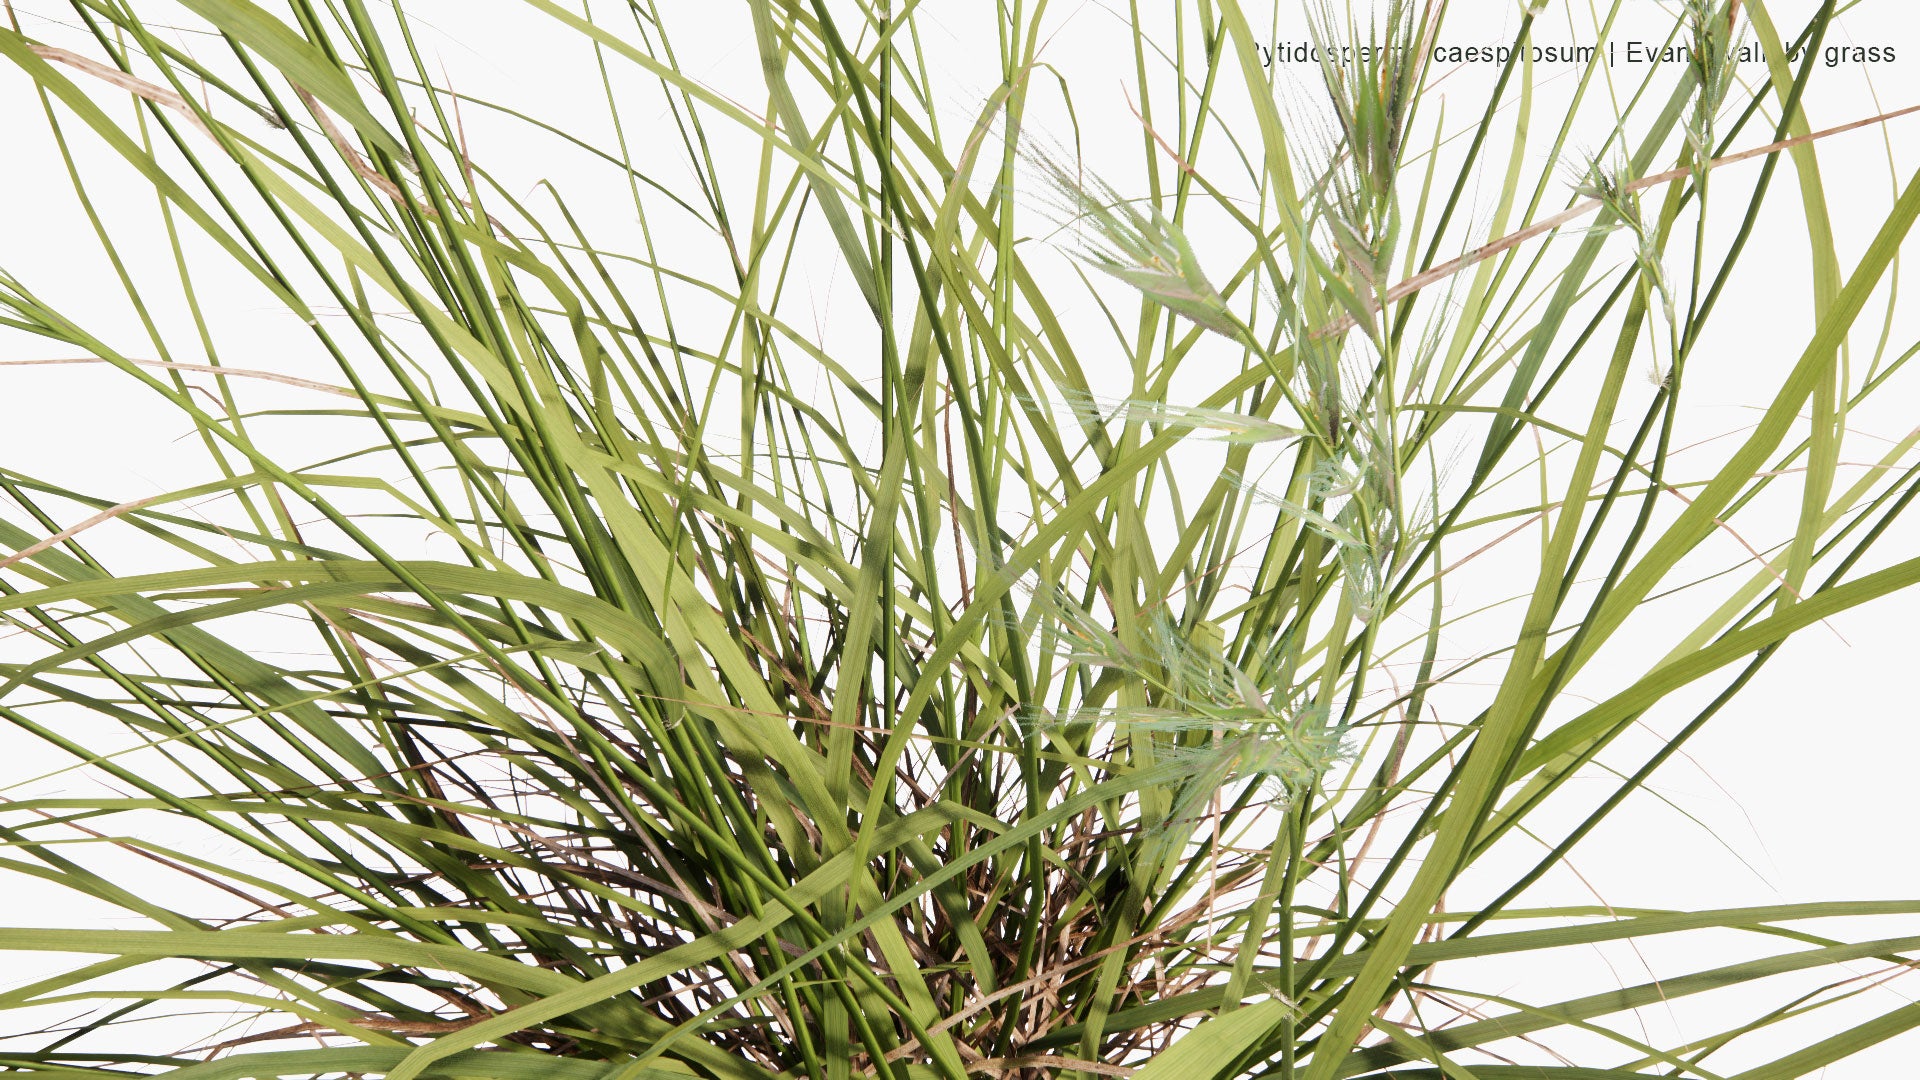 Low Poly Rytidosperma Caespitosum - Evans Wallaby Grass (3D Model)